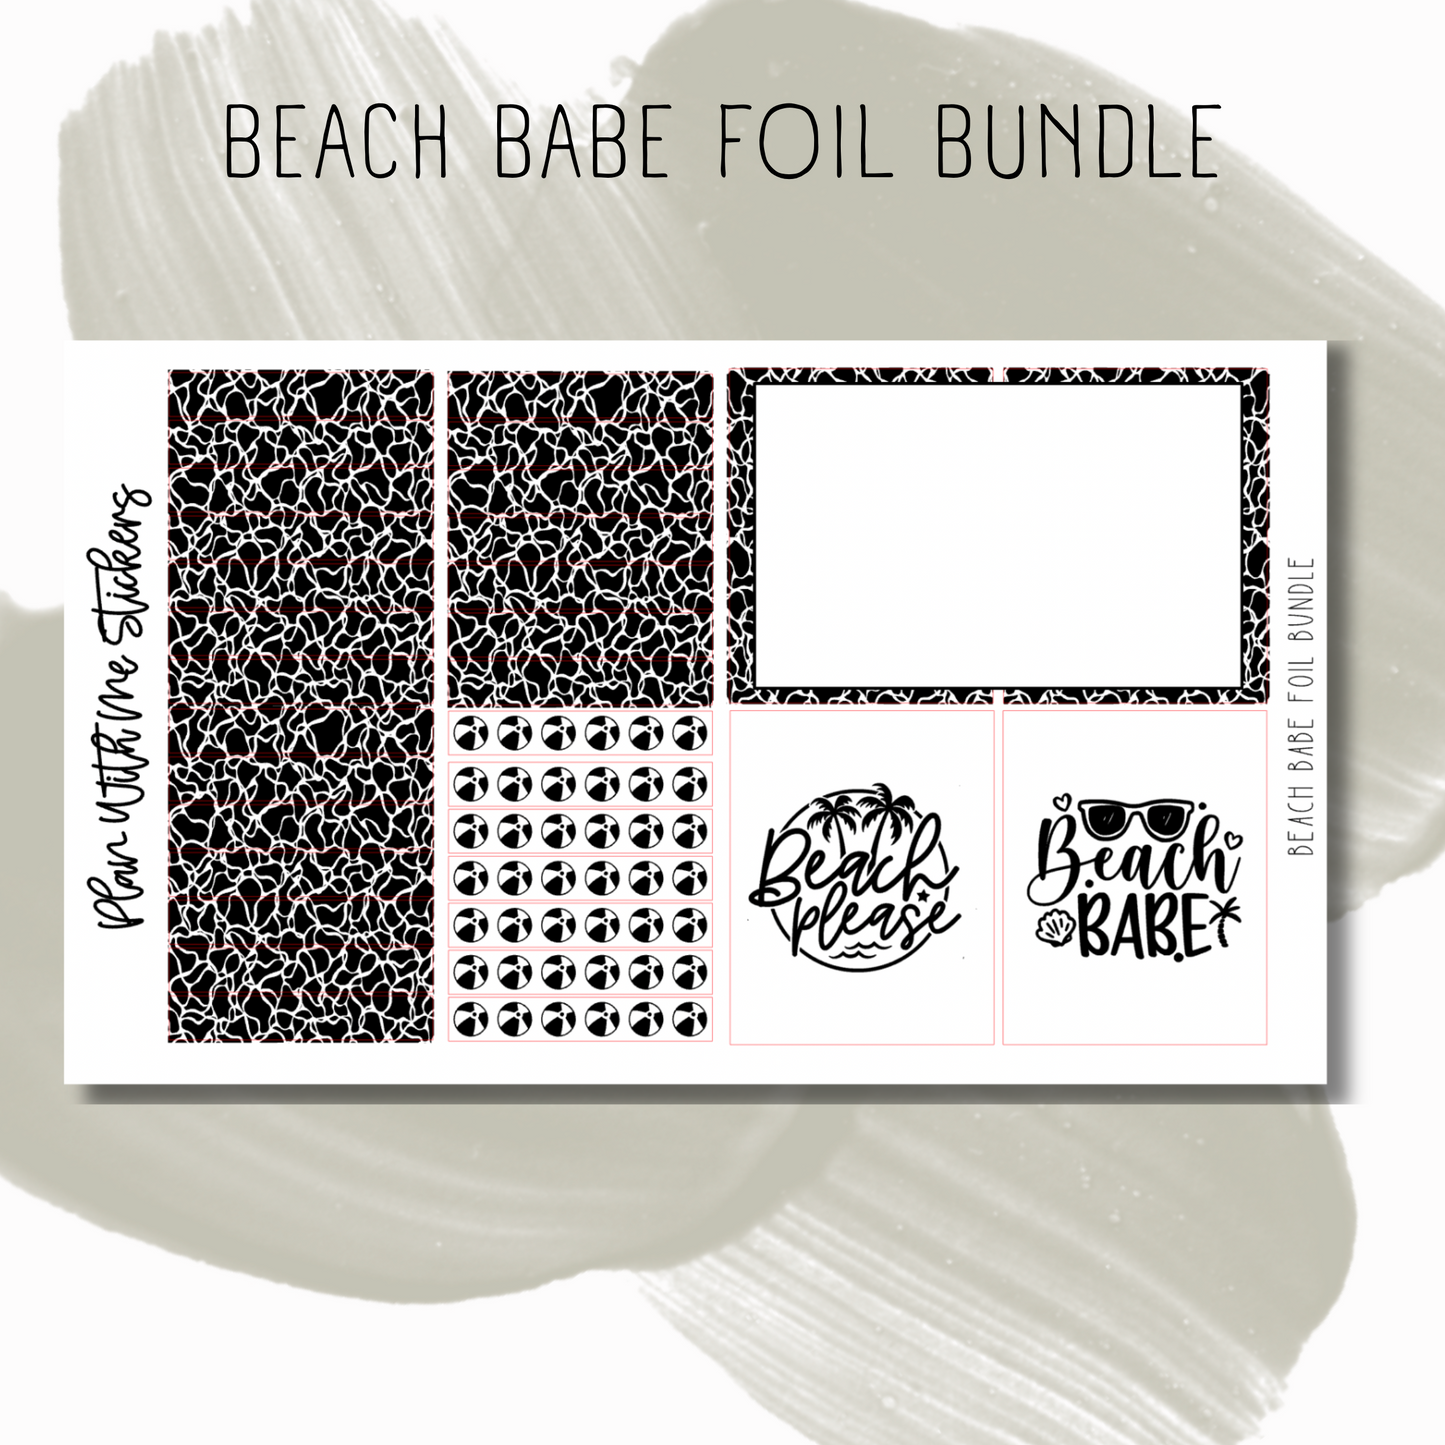 Beach Babe Foil Bundle